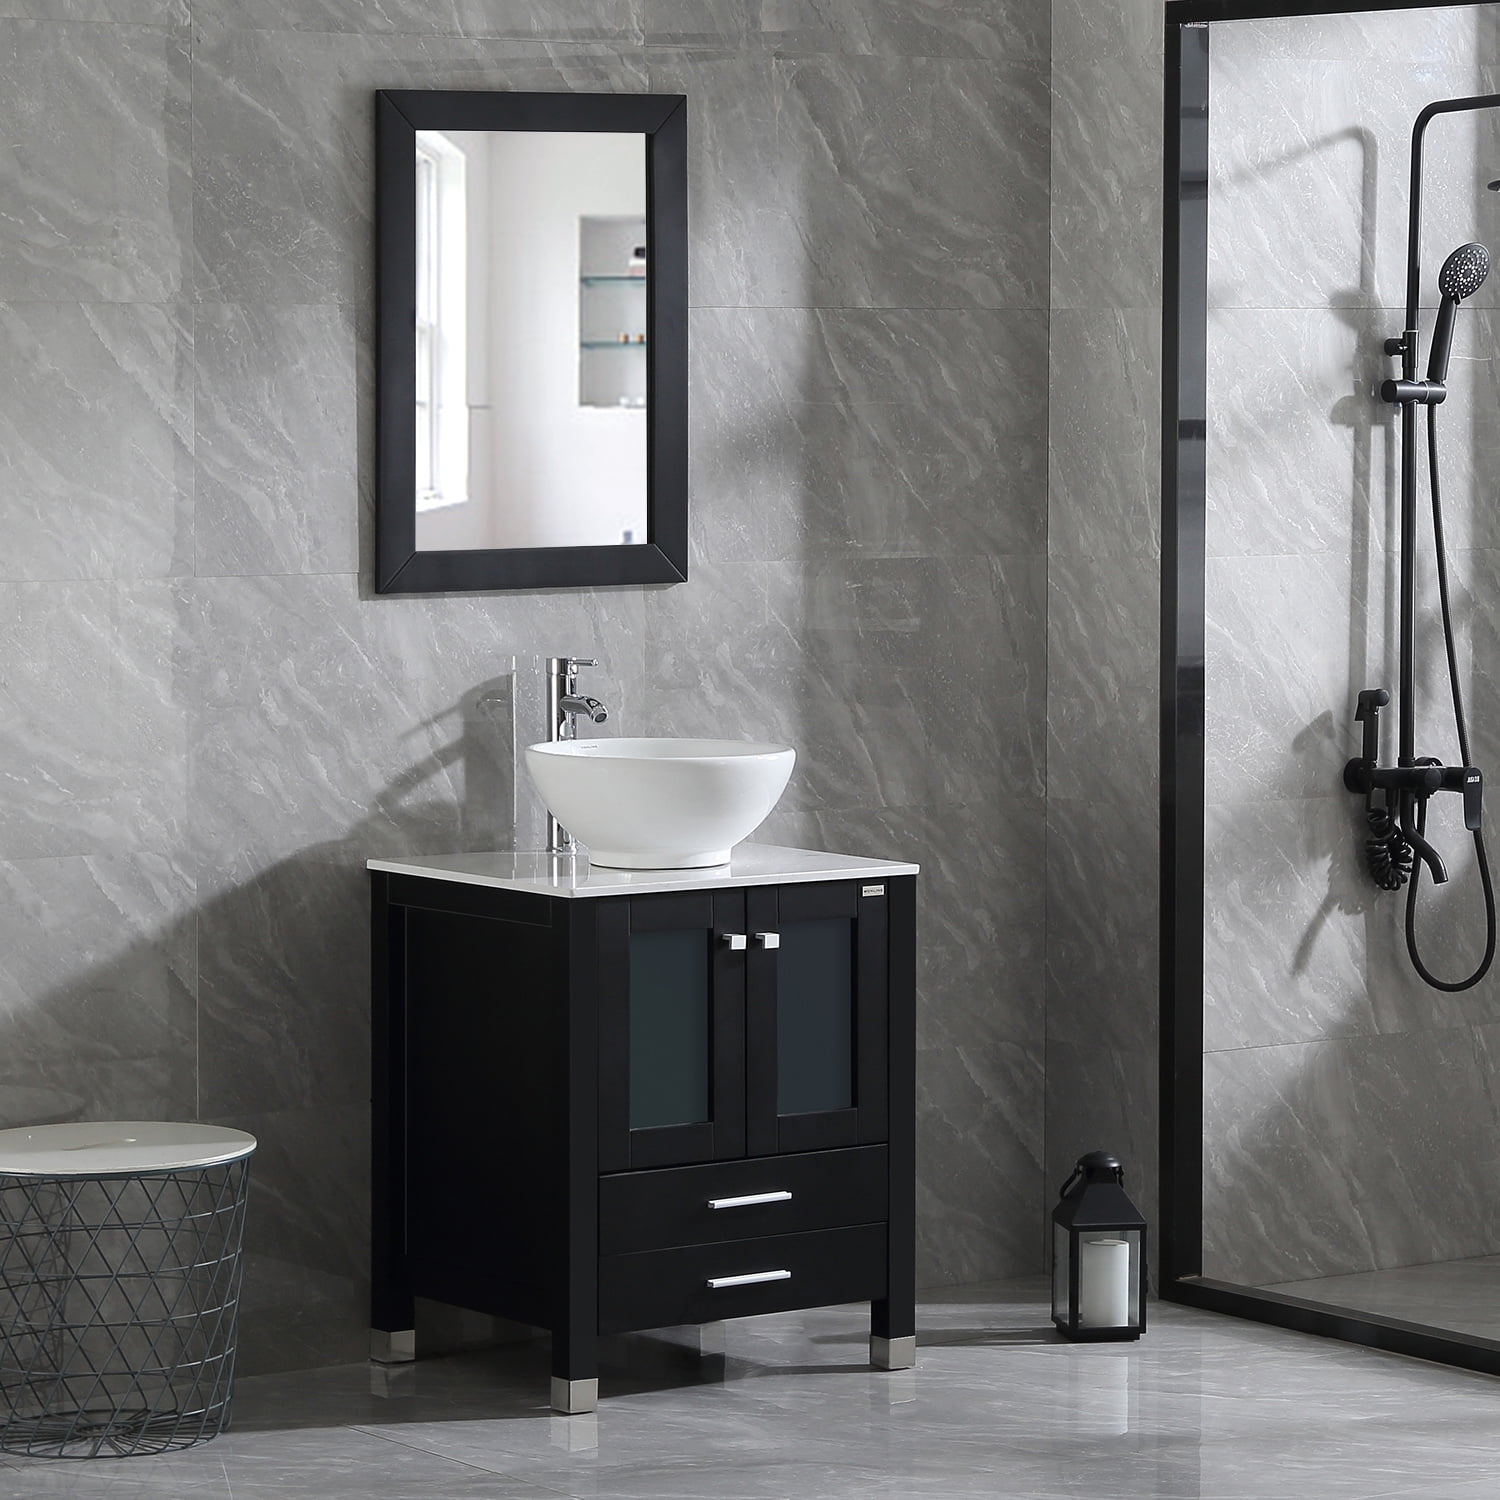 24" Bathroom Cabinet Wall Mounted Natural Vessel Sink Modern Vanity Mirror Combo 